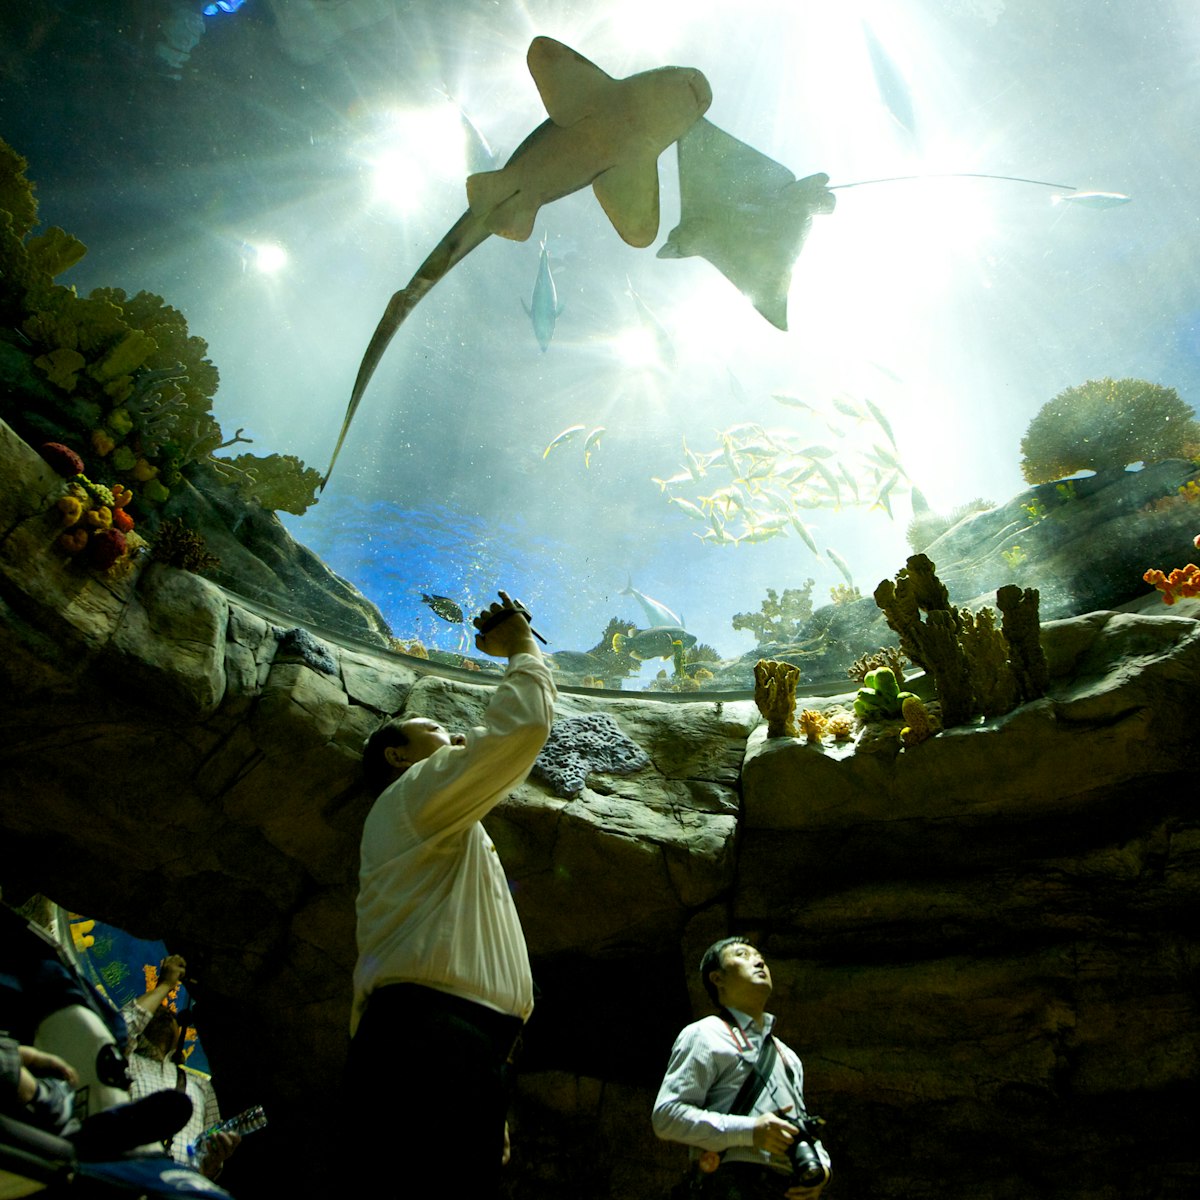 Visitors can see a wide range of ocean animals at Ocean Park's aquarium.